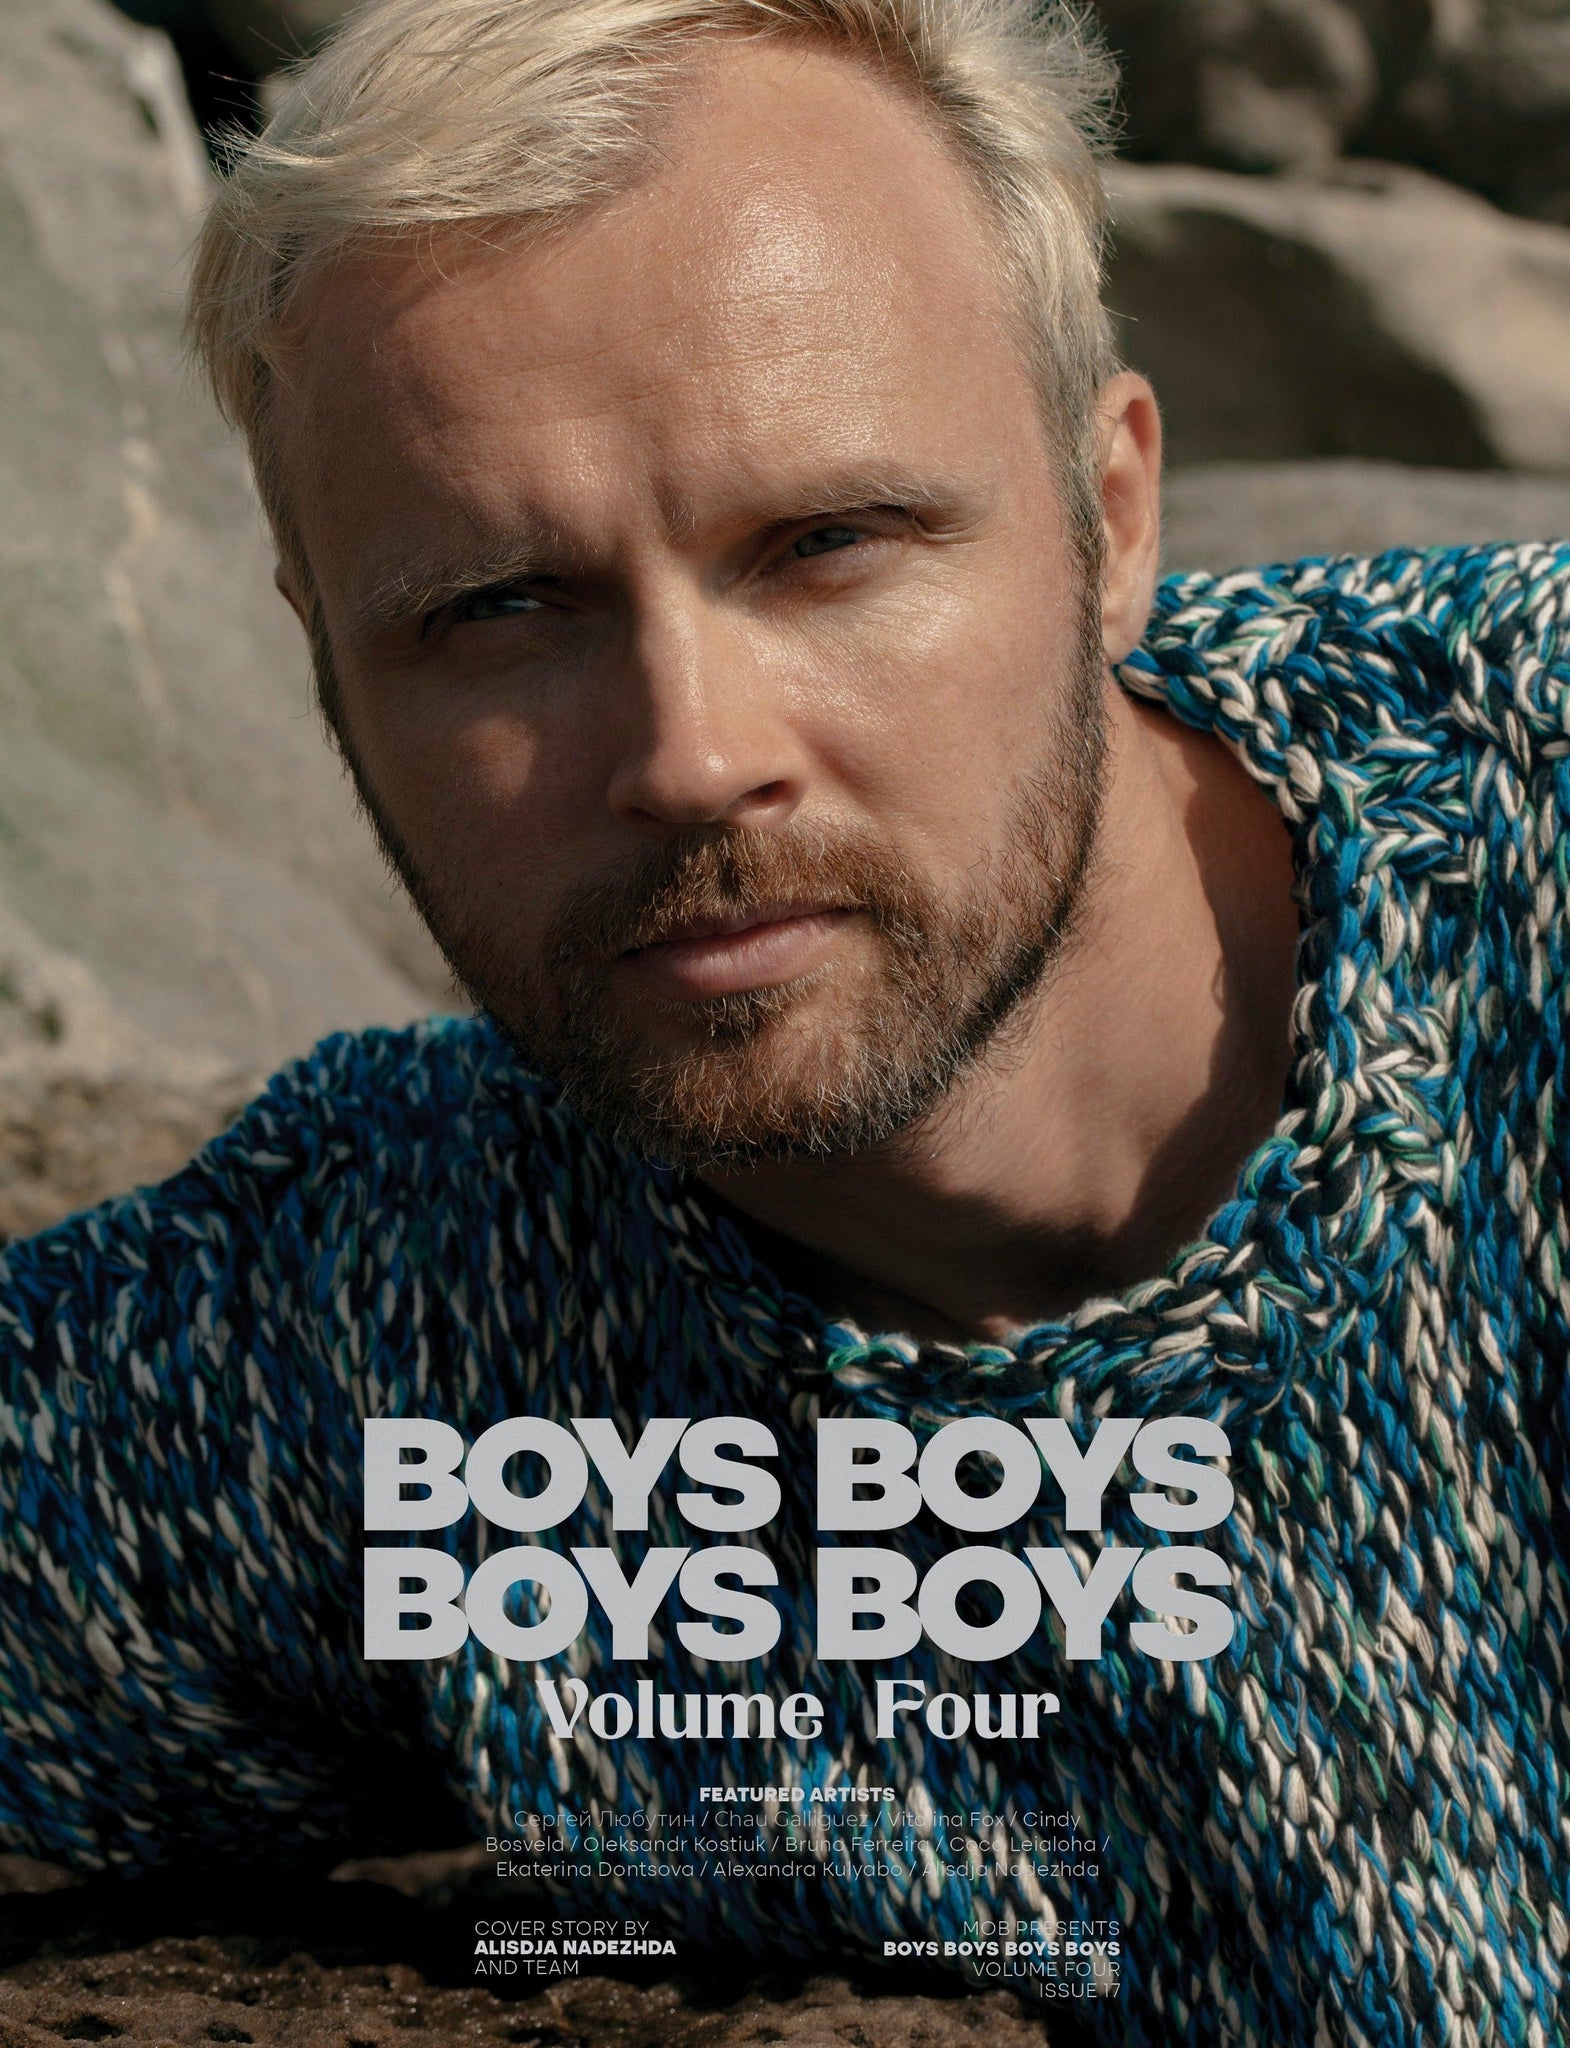 BOYS BOYS BOYS BOYS | VOLUME FOUR | ISSUE #17 - Mob Journal